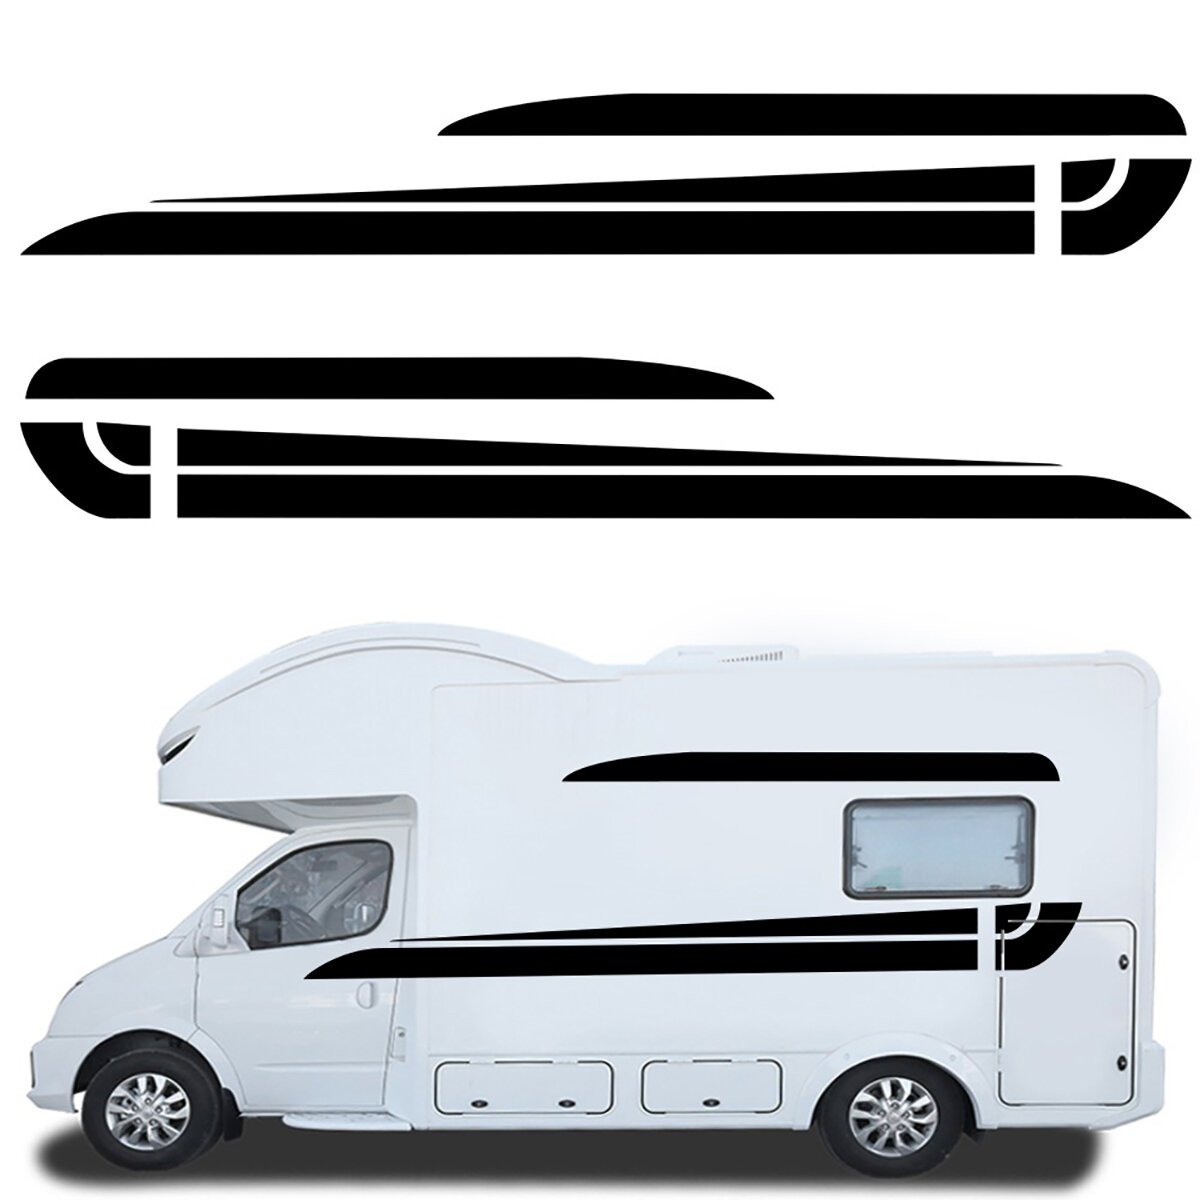 

2PCS Side Body Stickers Graphic Stripe Decals For Camper Van Motorhome RV Caravan